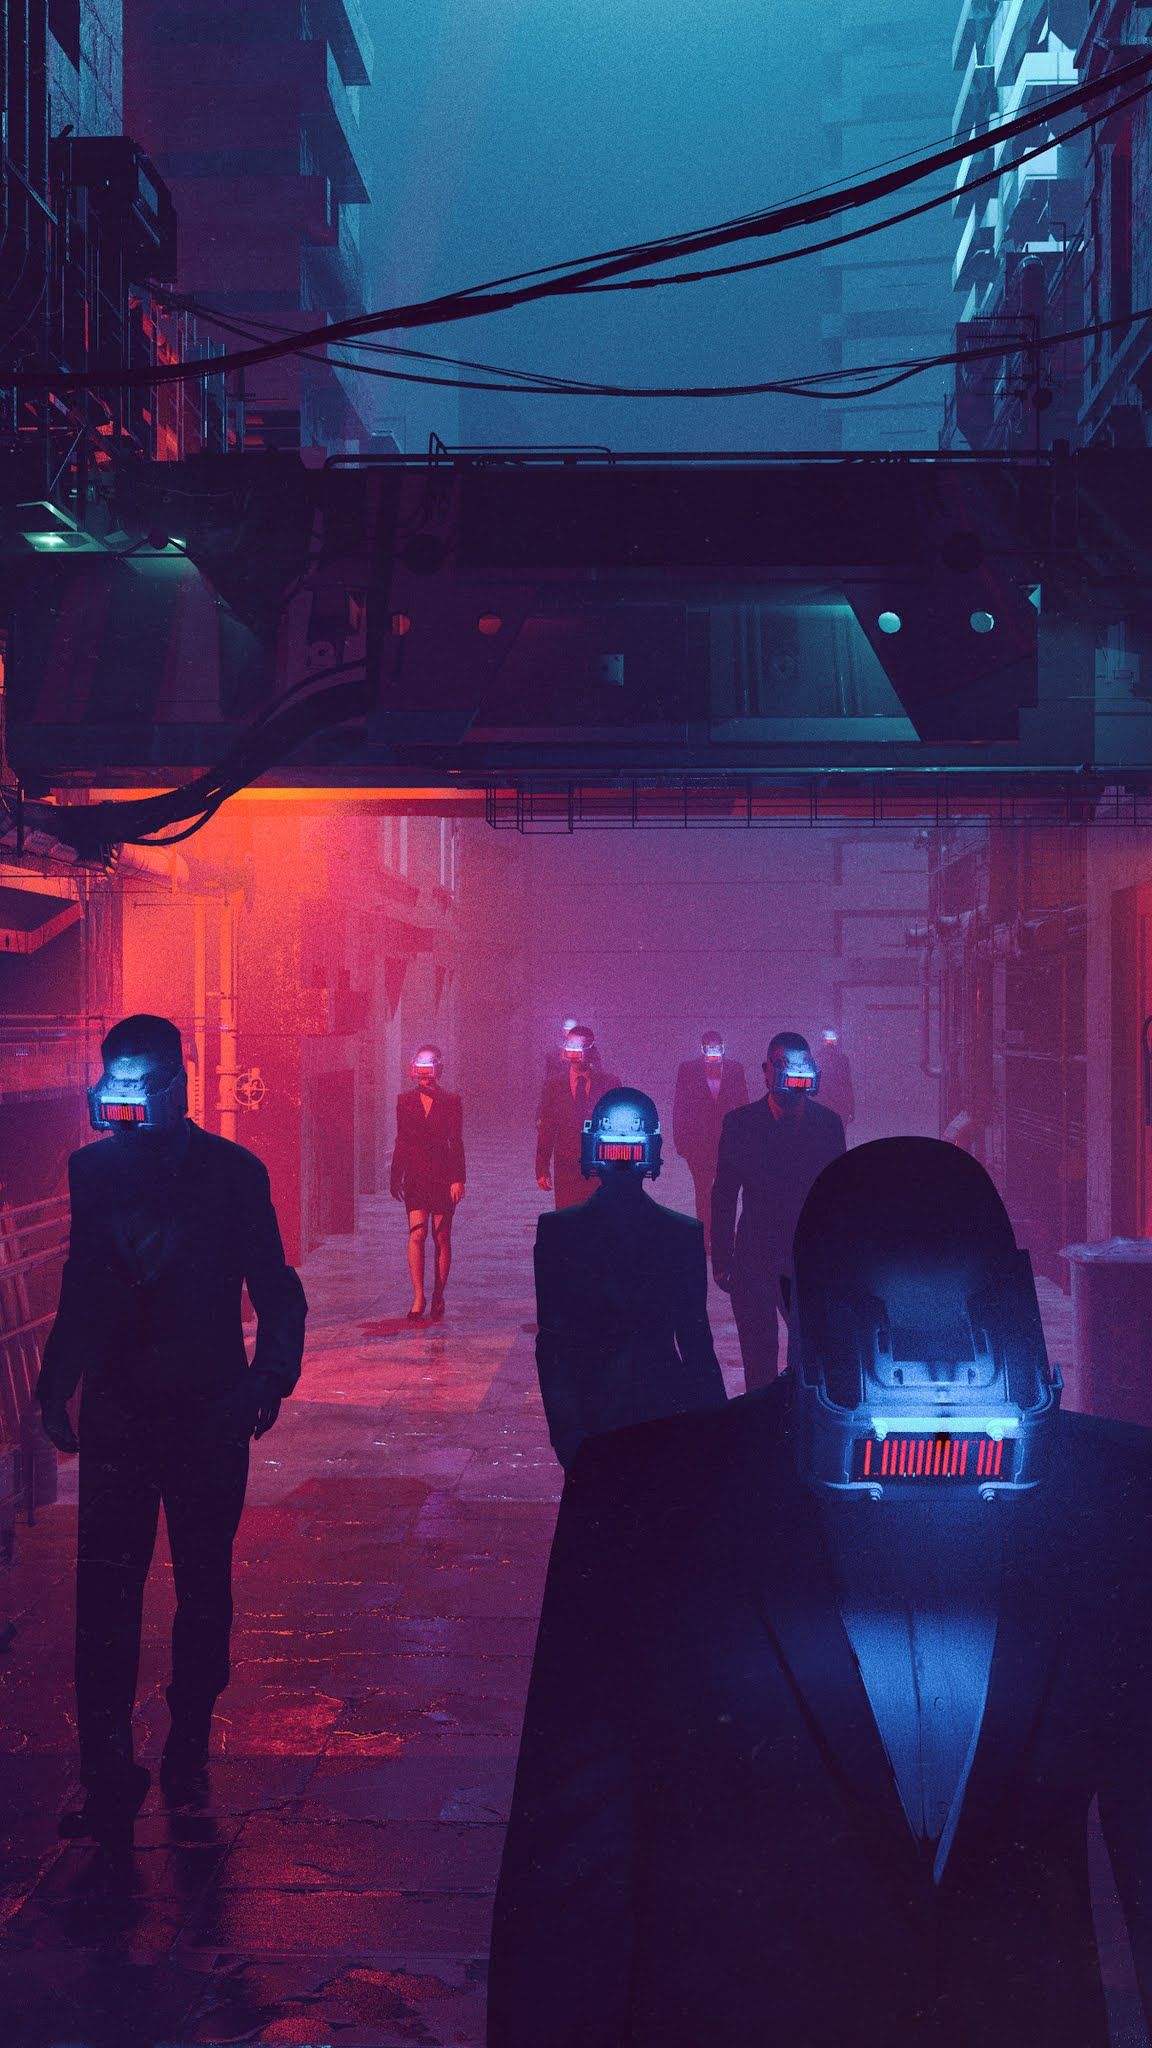 A cyberpunk-themed wallpaper with a group of people walking down a neon-lit alleyway. - Cyberpunk